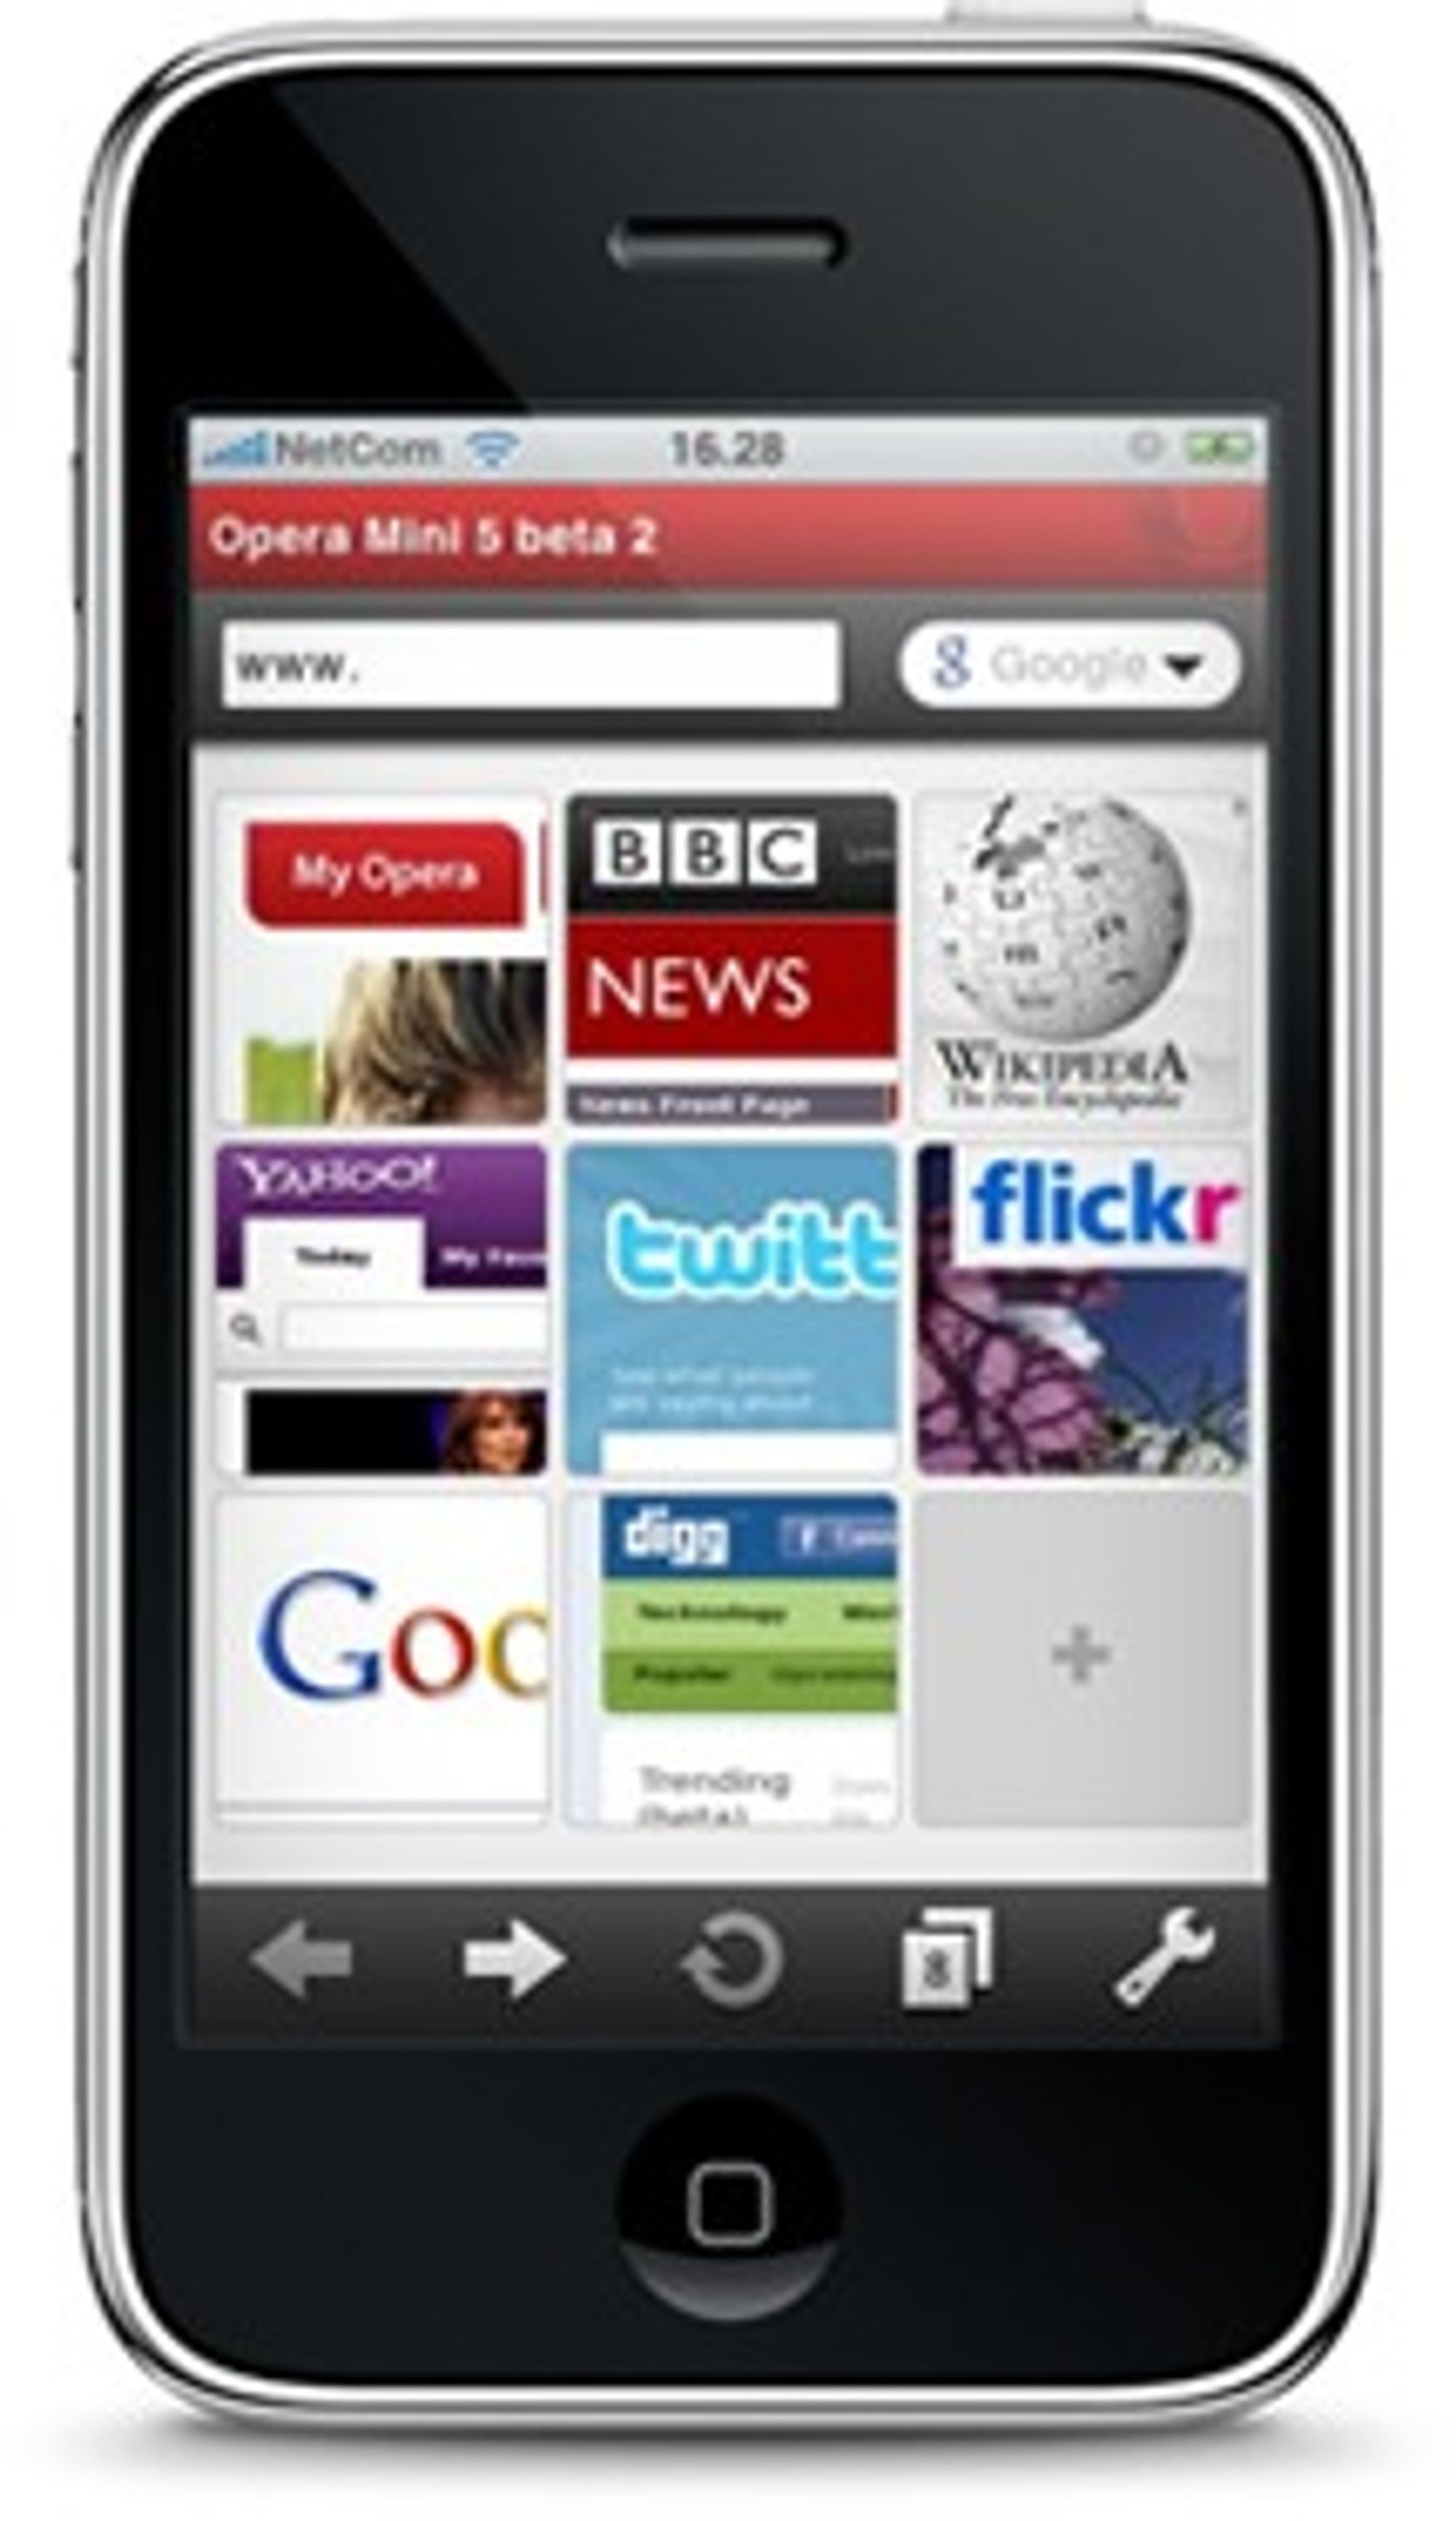 Opera Mini beta 2 på iPhone